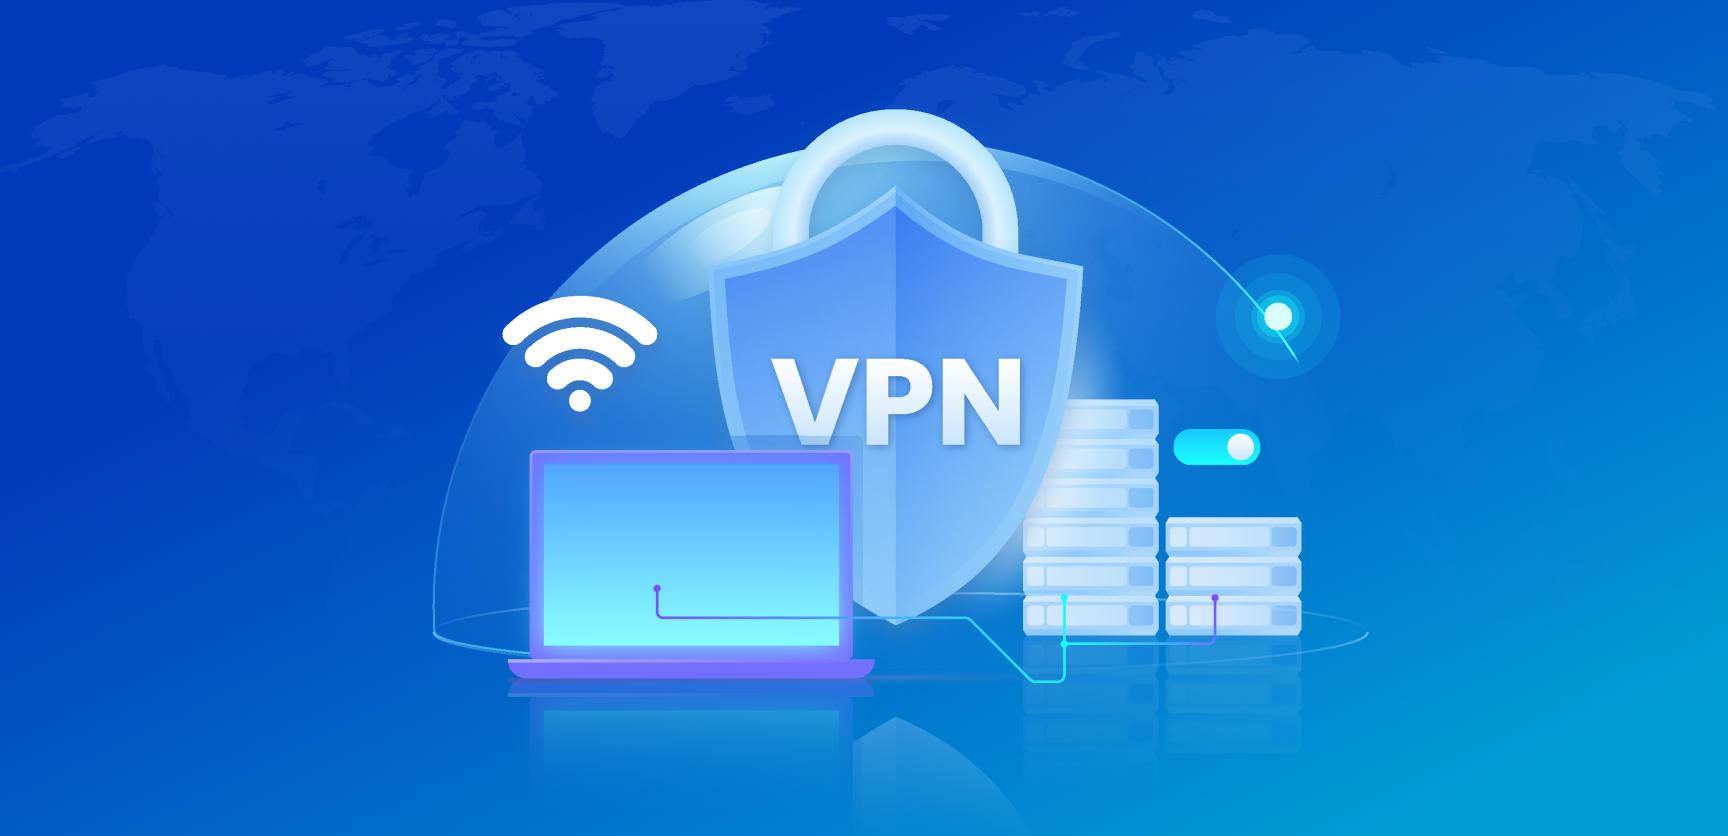 Site to Site VPN vs Remote Access VPN - Feature image